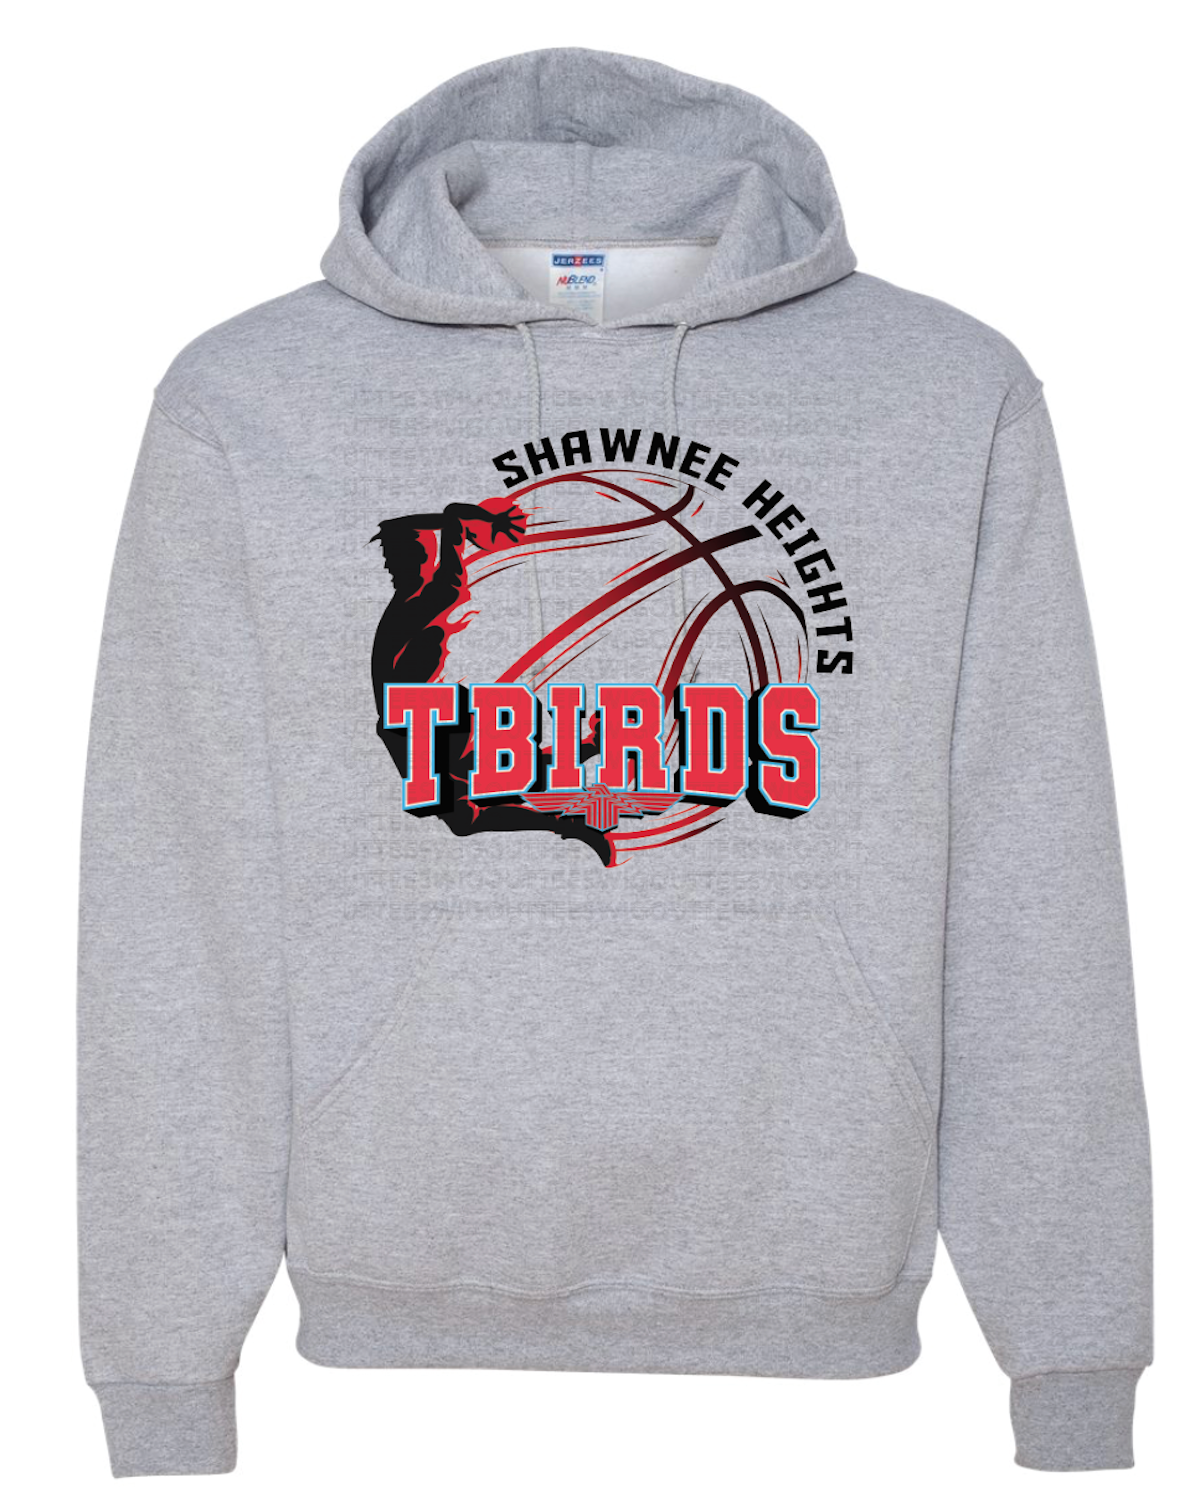 SHHS Tbirds Basketball Jerzees Nublend Hooded Sweatshirt